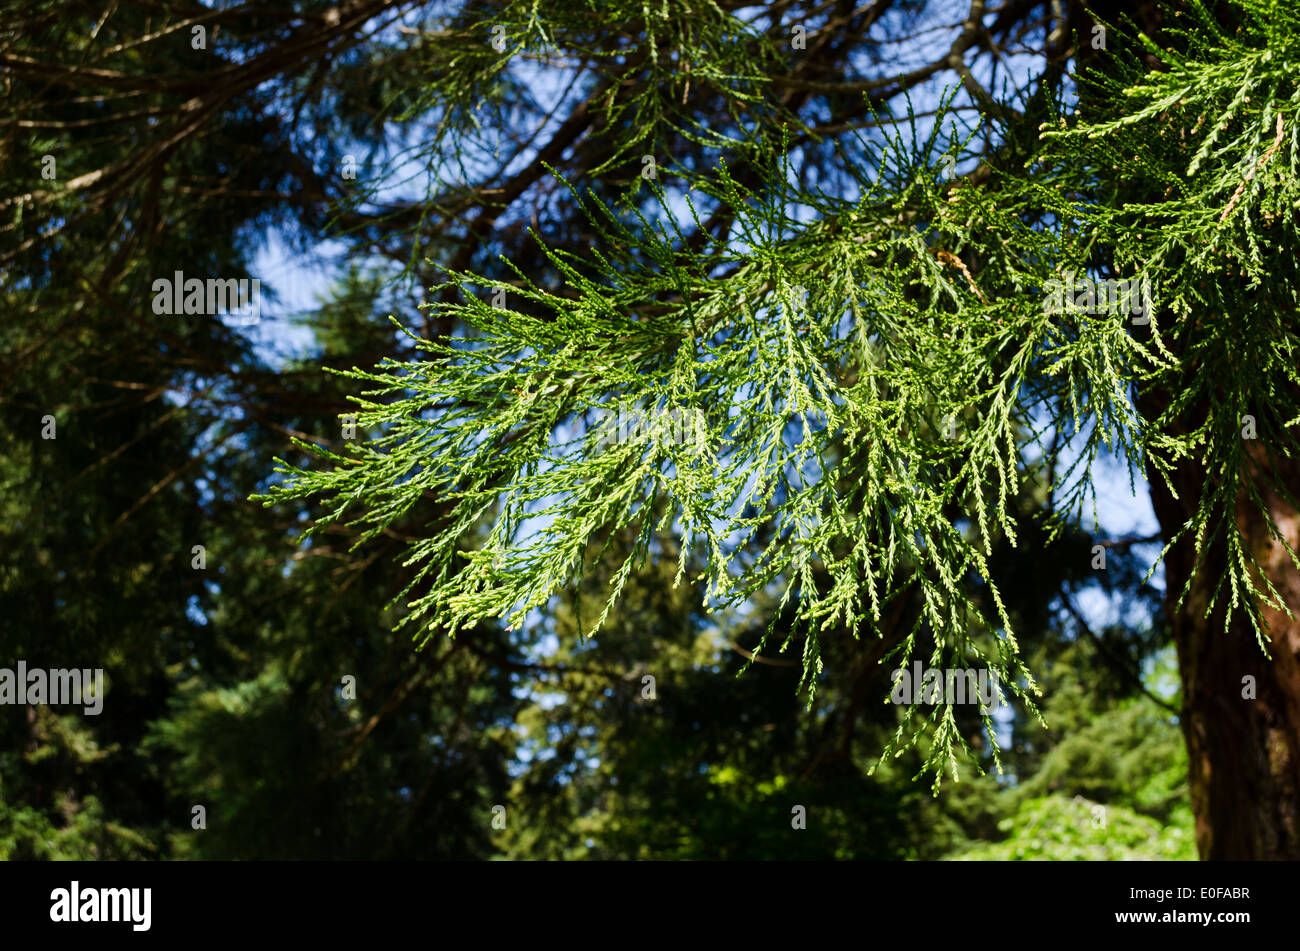 Branches of the Giant Sequoia tree, Sequoiadendron gigantean in Washington State, U.S.A. Stock Photo